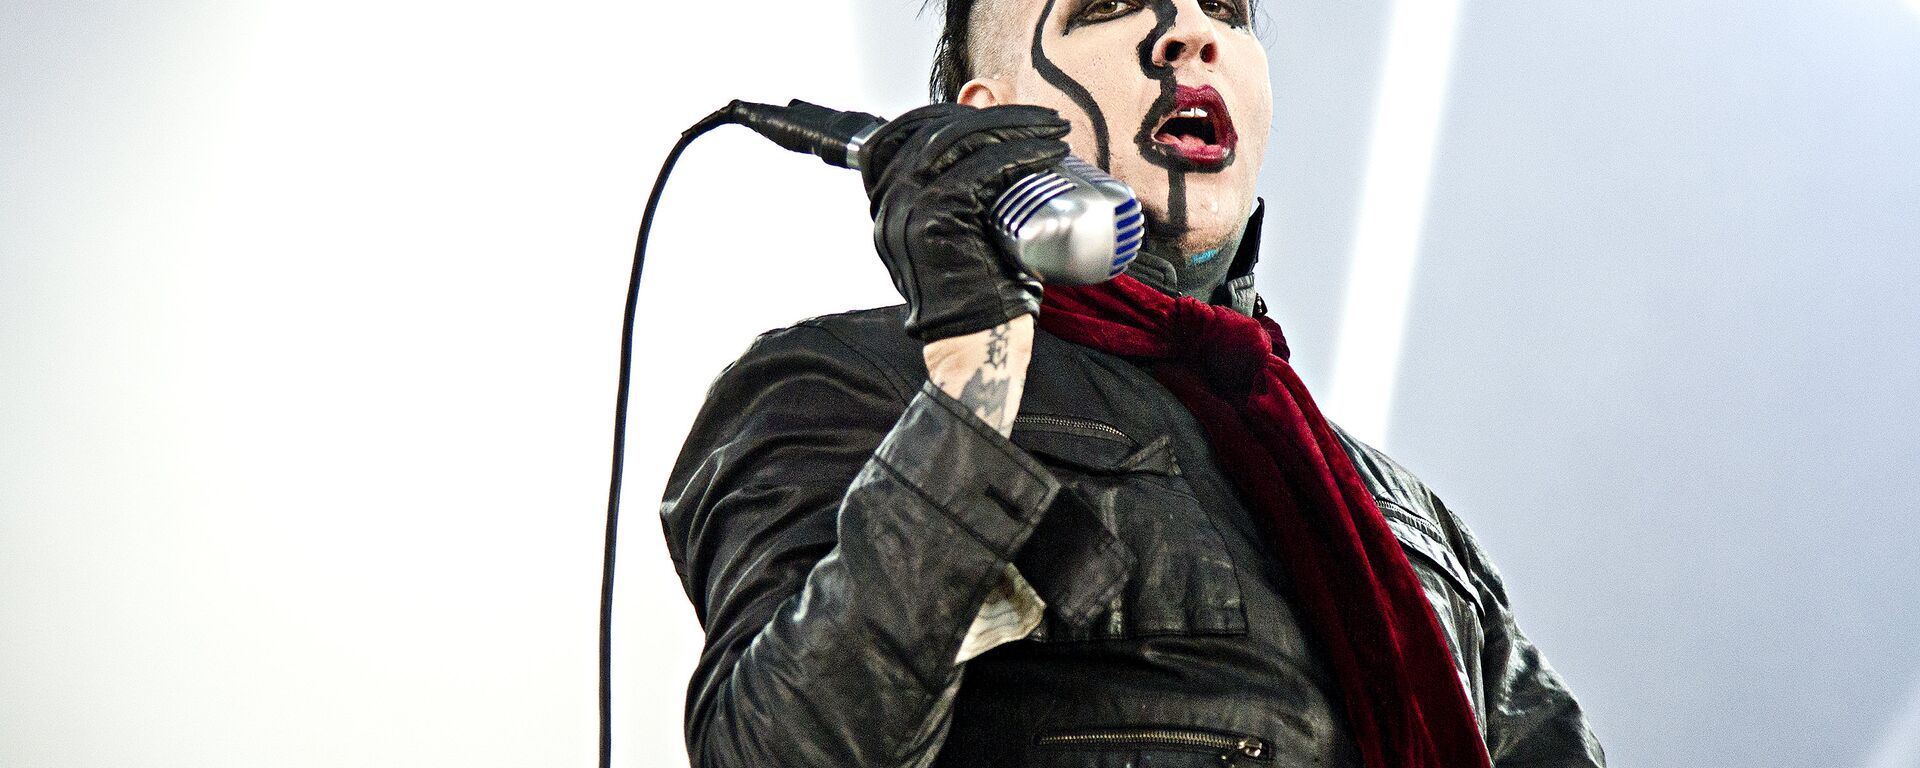 Marilyn Manson performs at Riverbend Music Center on Aug. 8, 2015, in Cincinnati (File) - Sputnik International, 1920, 30.11.2021